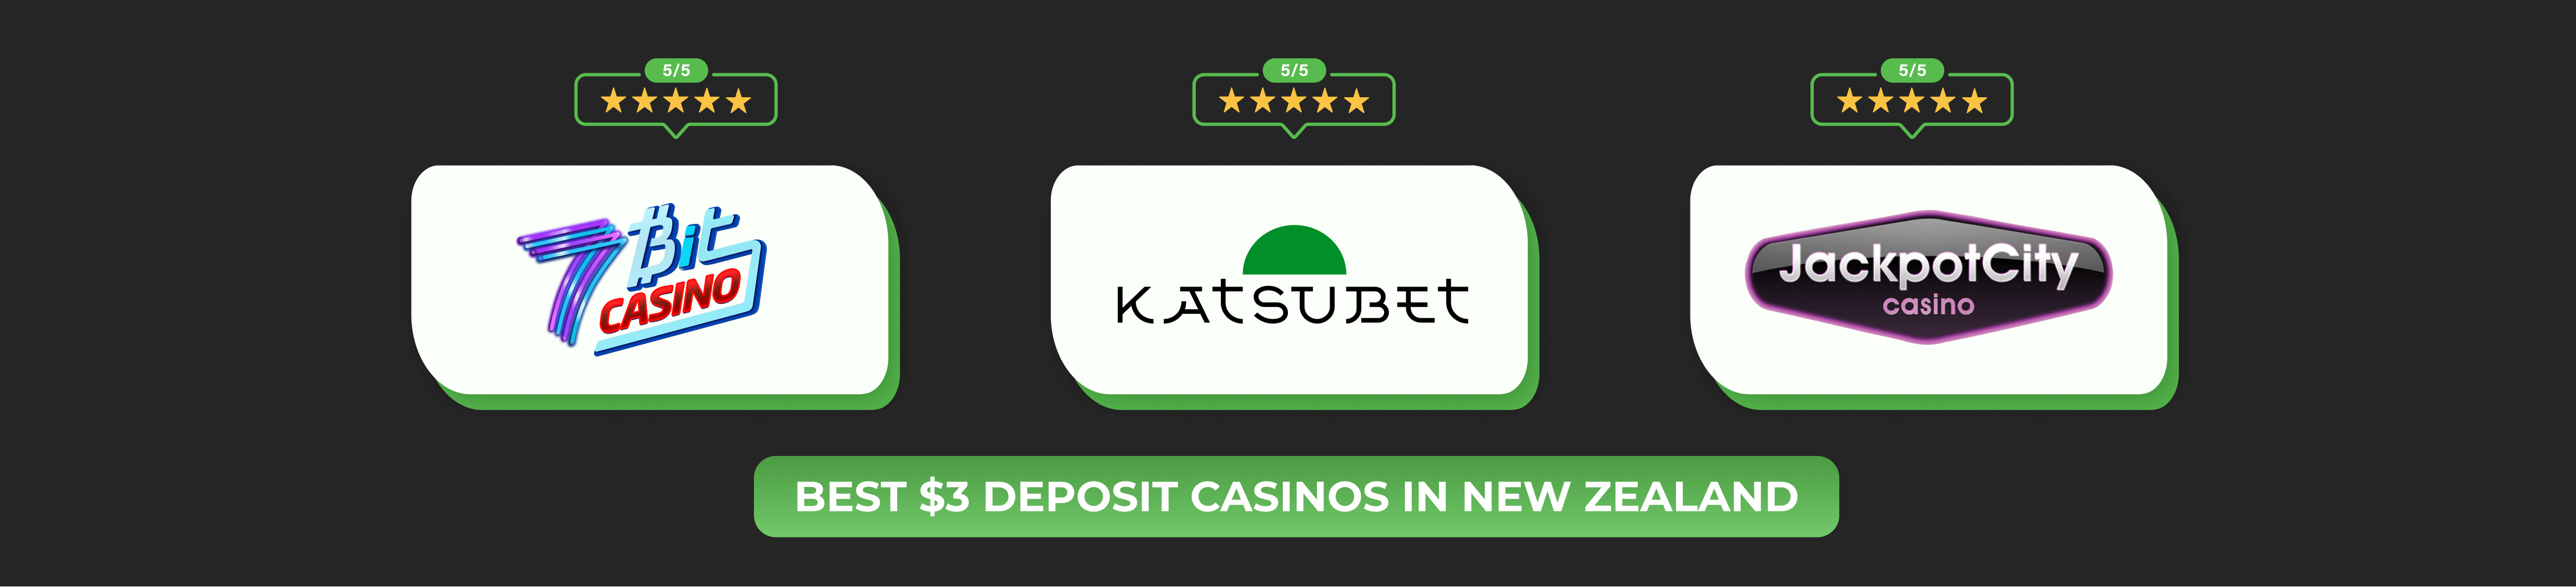 top 3 dollar deposit casinos new zealand